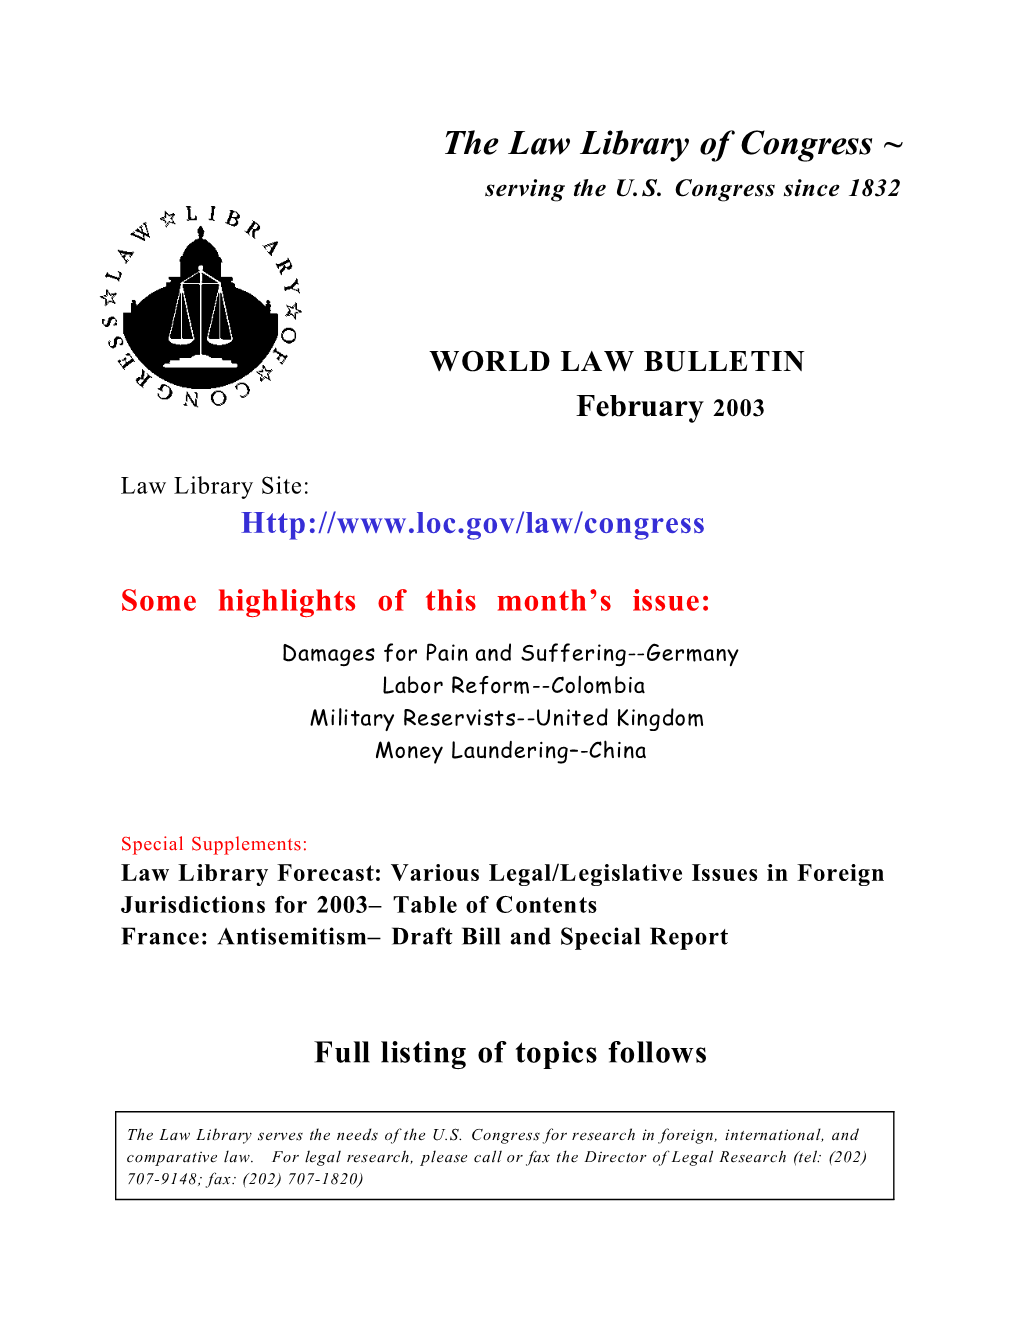 World Law Bulletin: February 2003